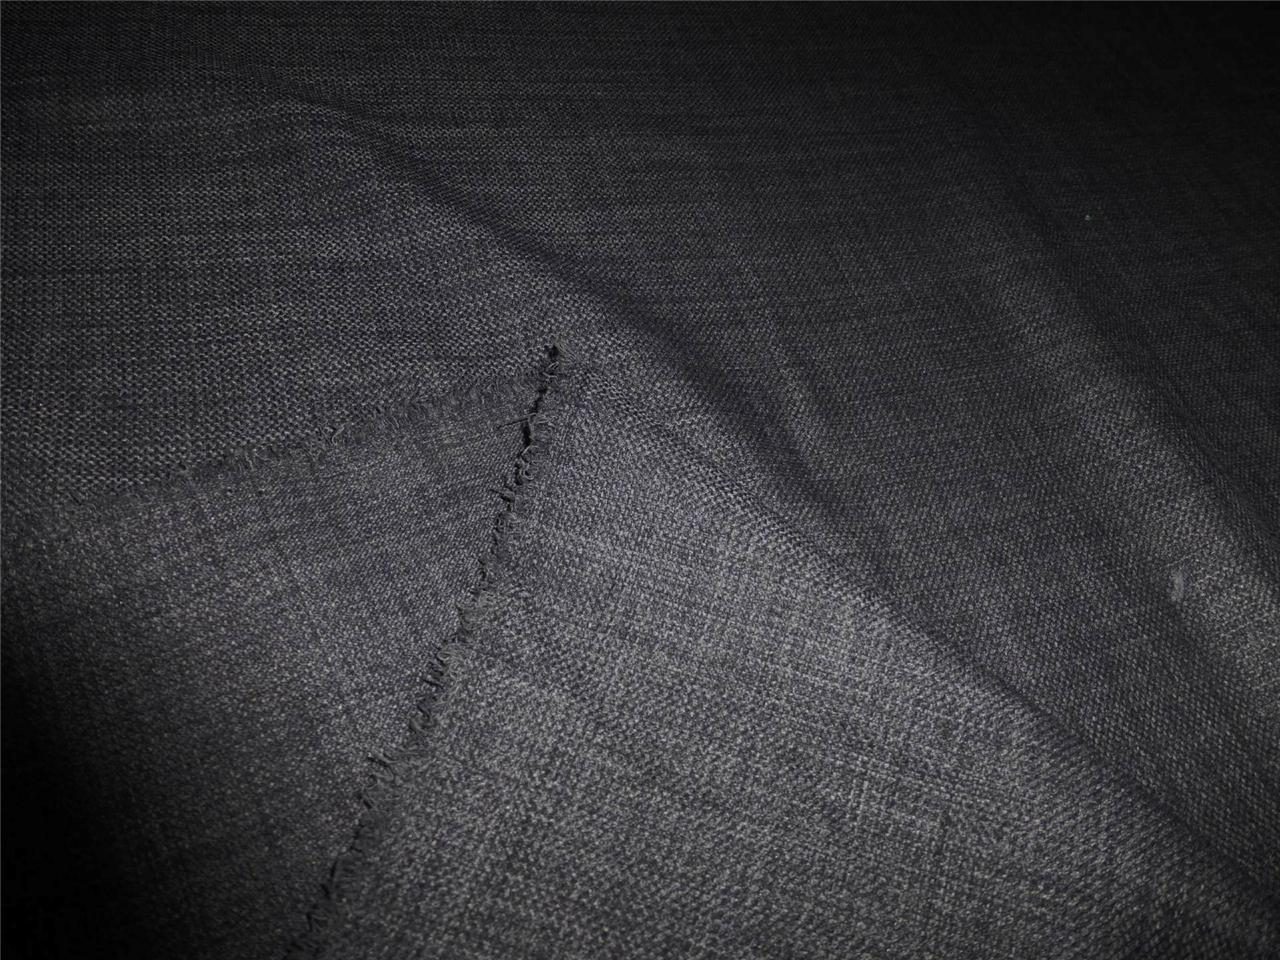 CHARCOAL GREY Linen Look Upholstery Fabric - Ellbee Fabrics